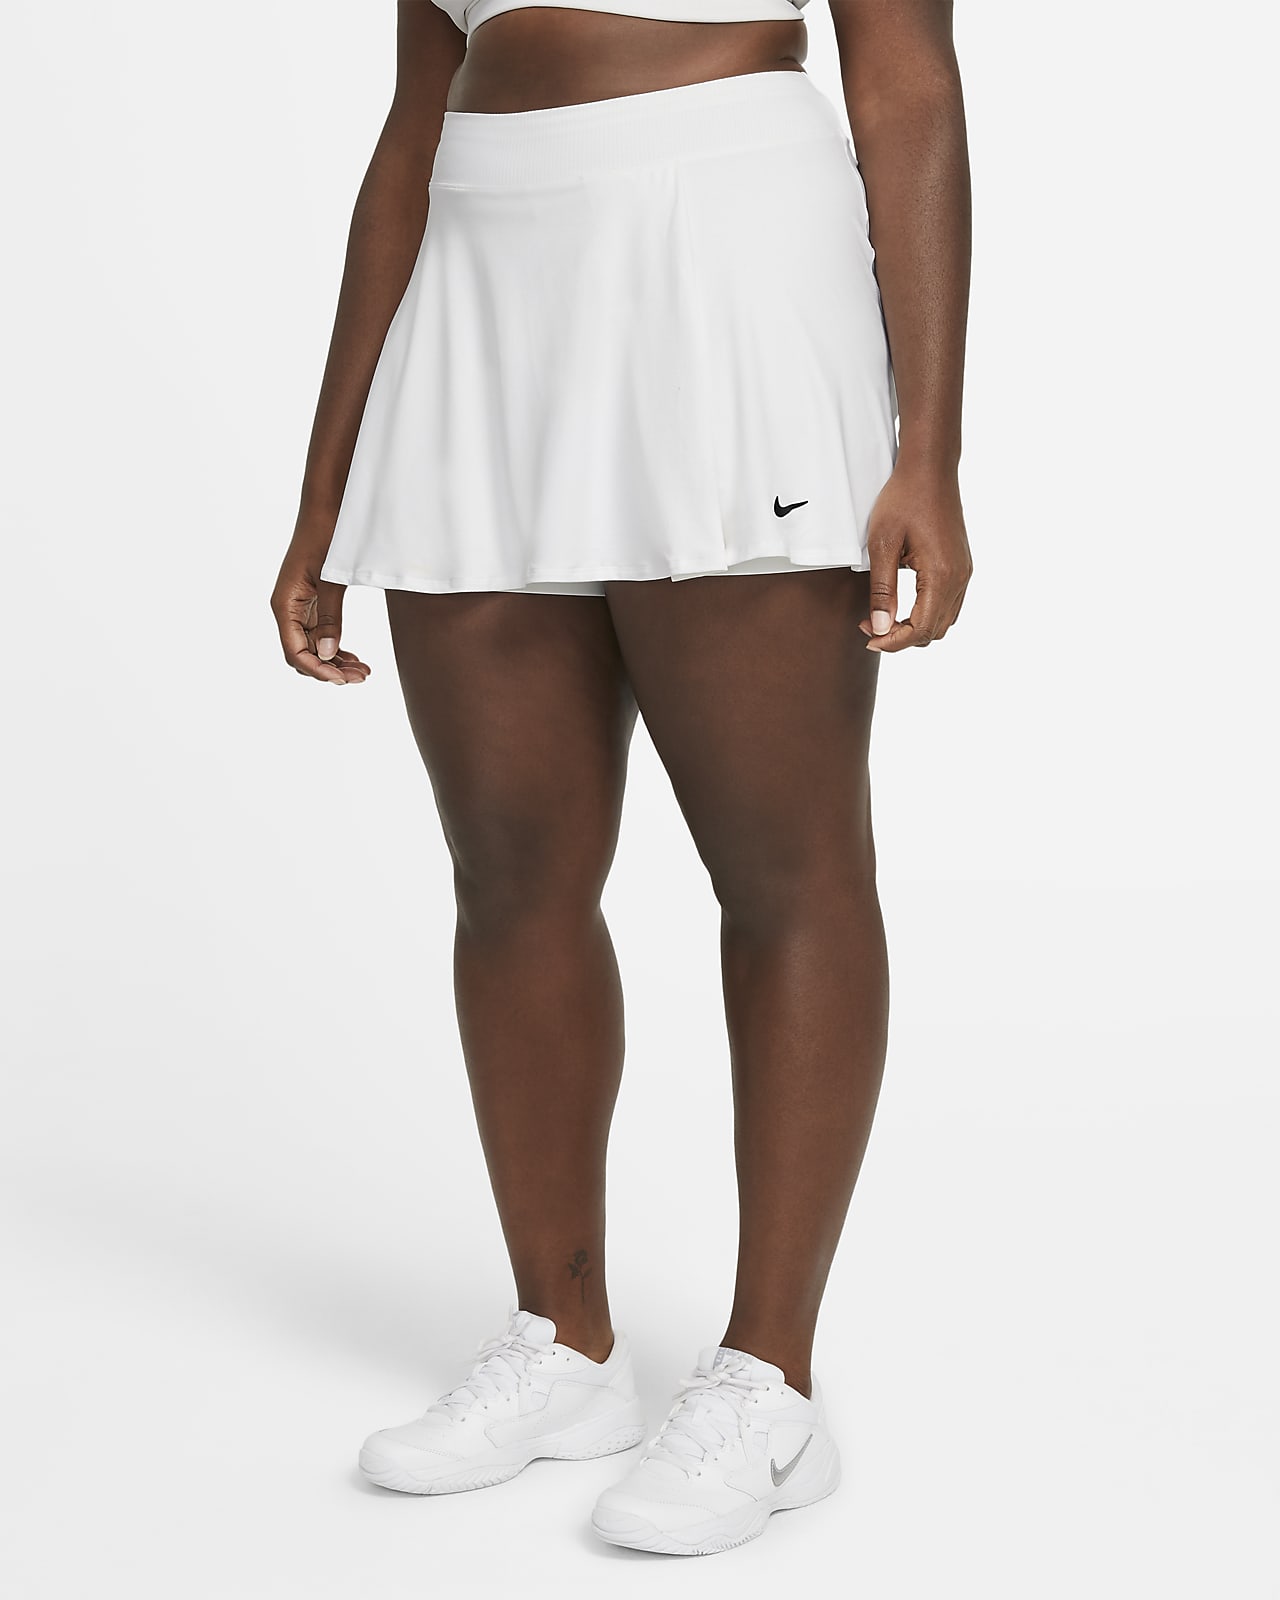 NikeCourt Victory Women's Tennis Skirt ...